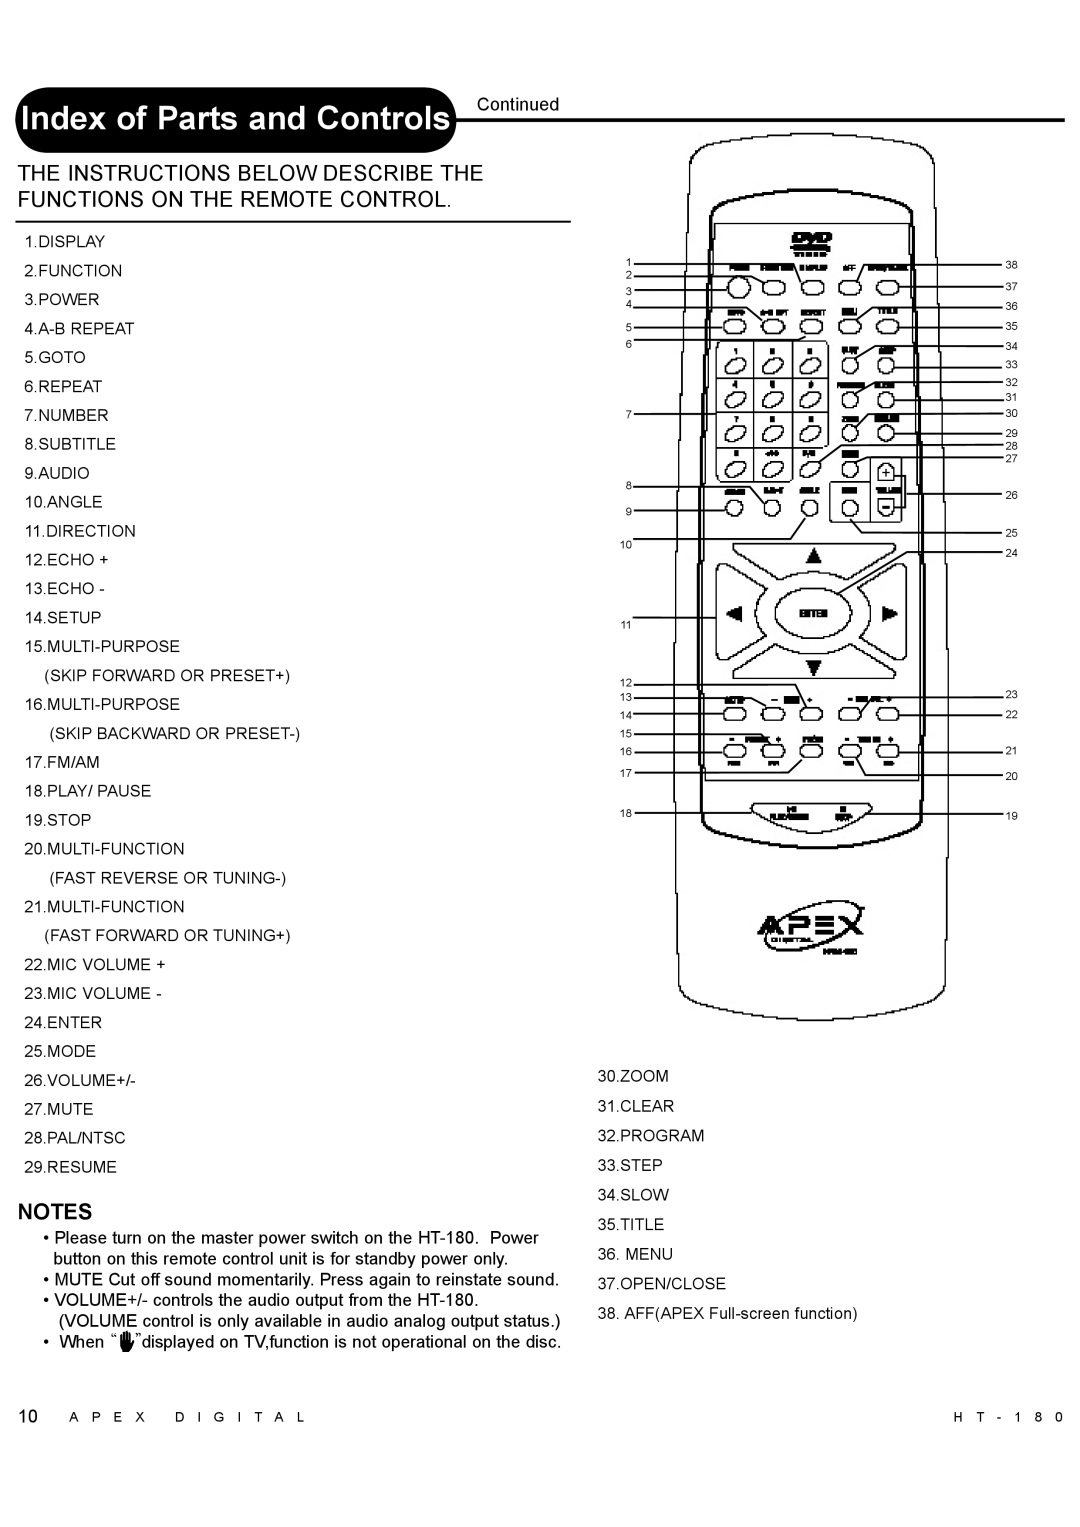 Apex Digital HT-180 manual Index of Parts and Controls 